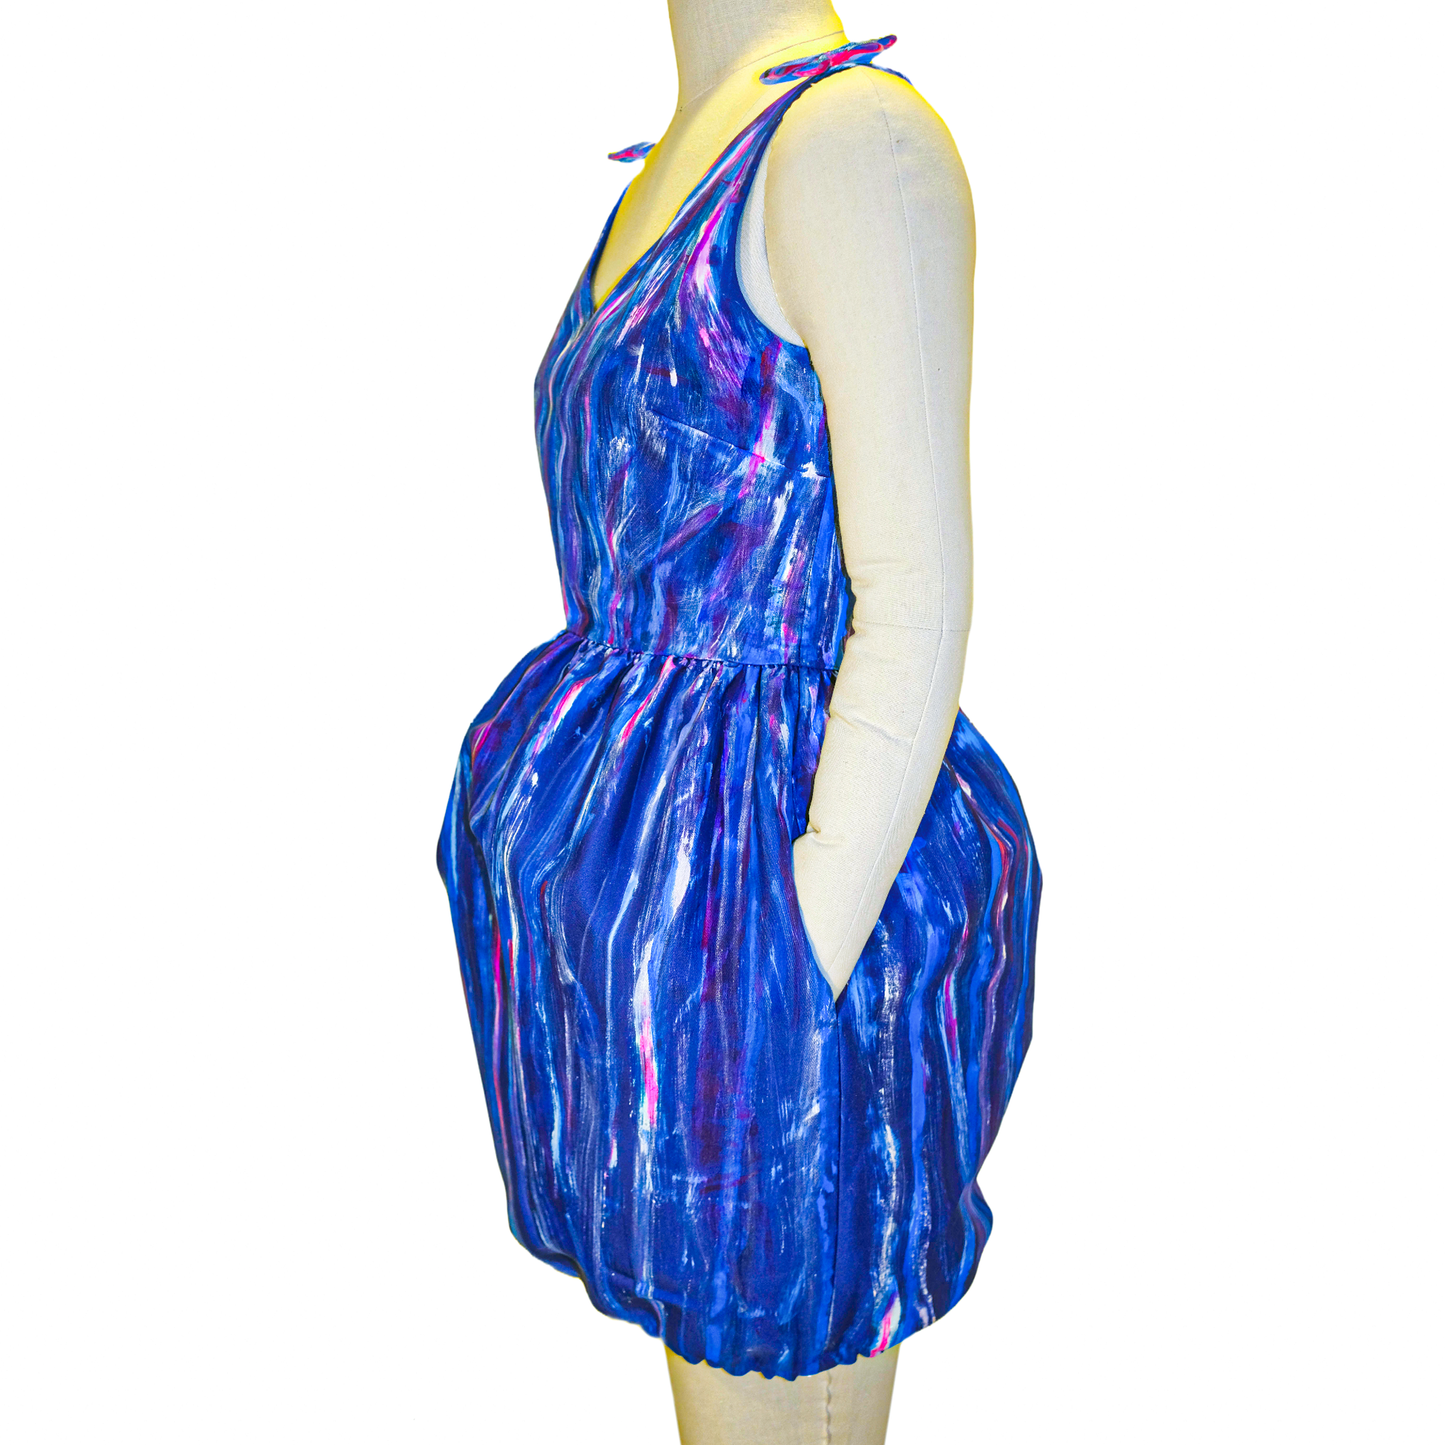 "Cold Hearted" Size 4 - Kate Spade Bubble Dress - Hand-Painted by Skye De La Rosa